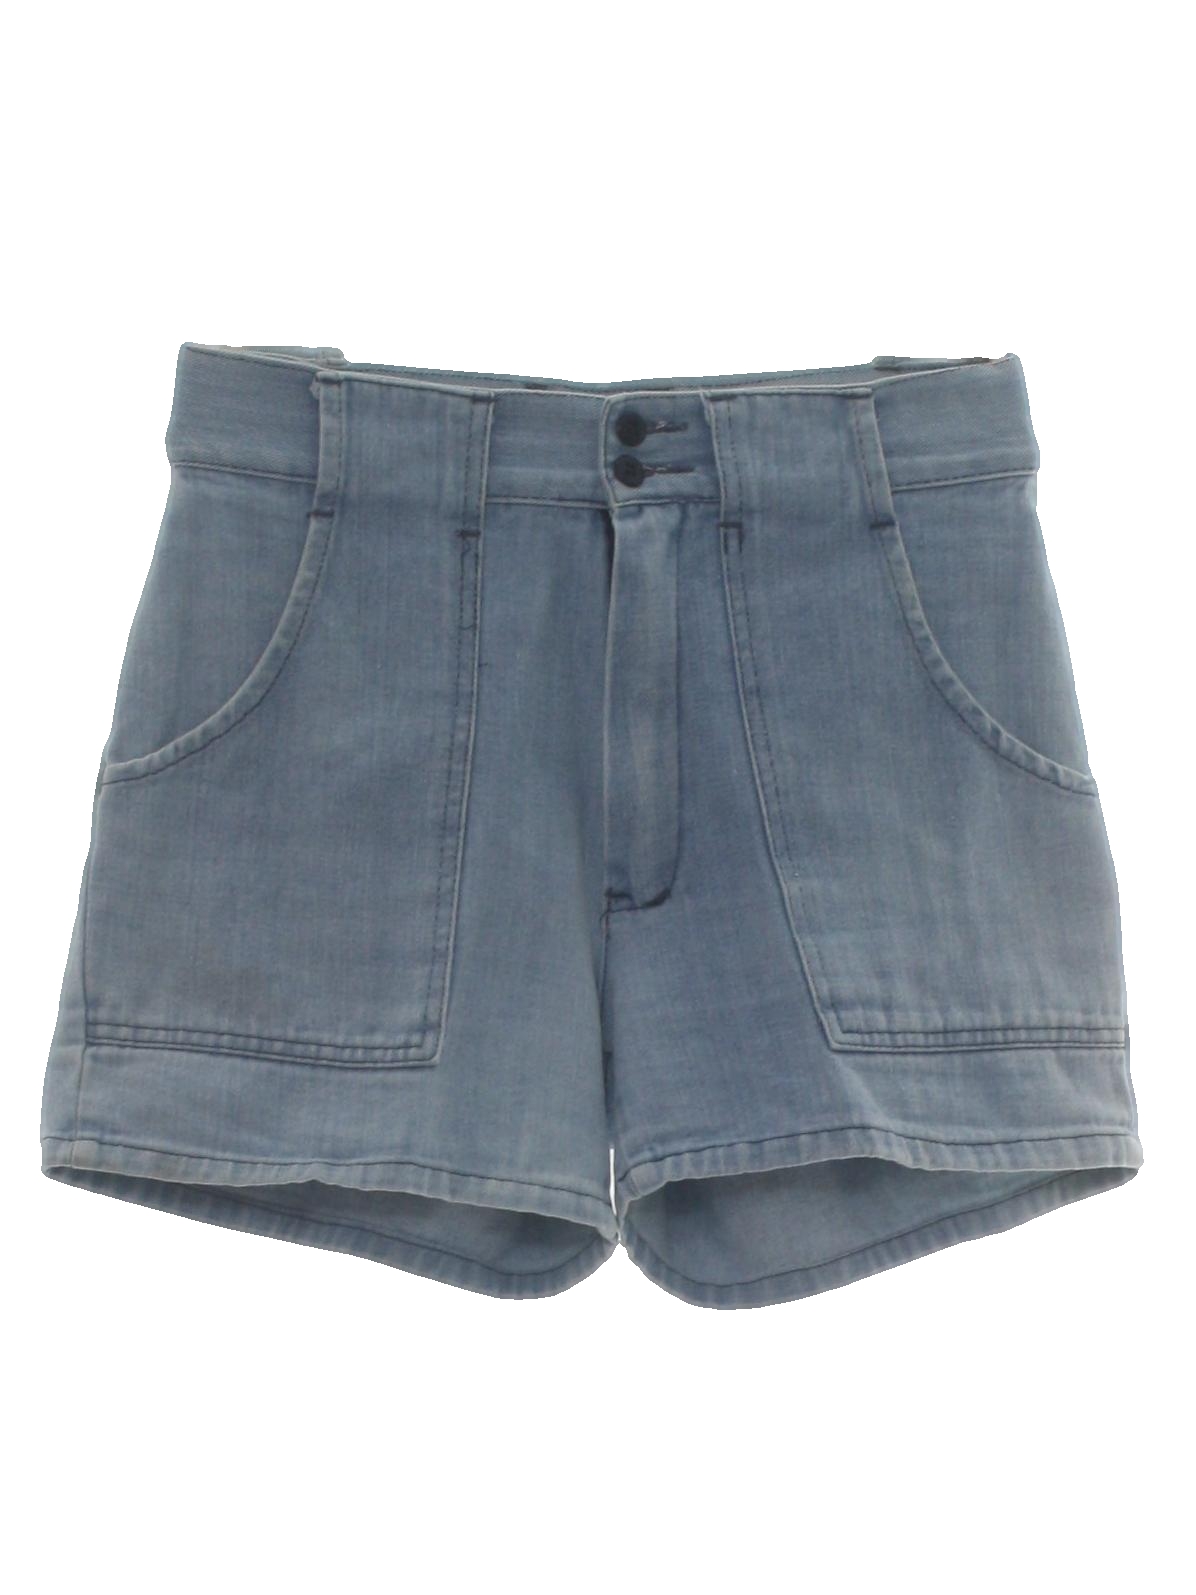 Retro 1970s Shorts: 70s -Sportif- Unisex light blue background cotton ...